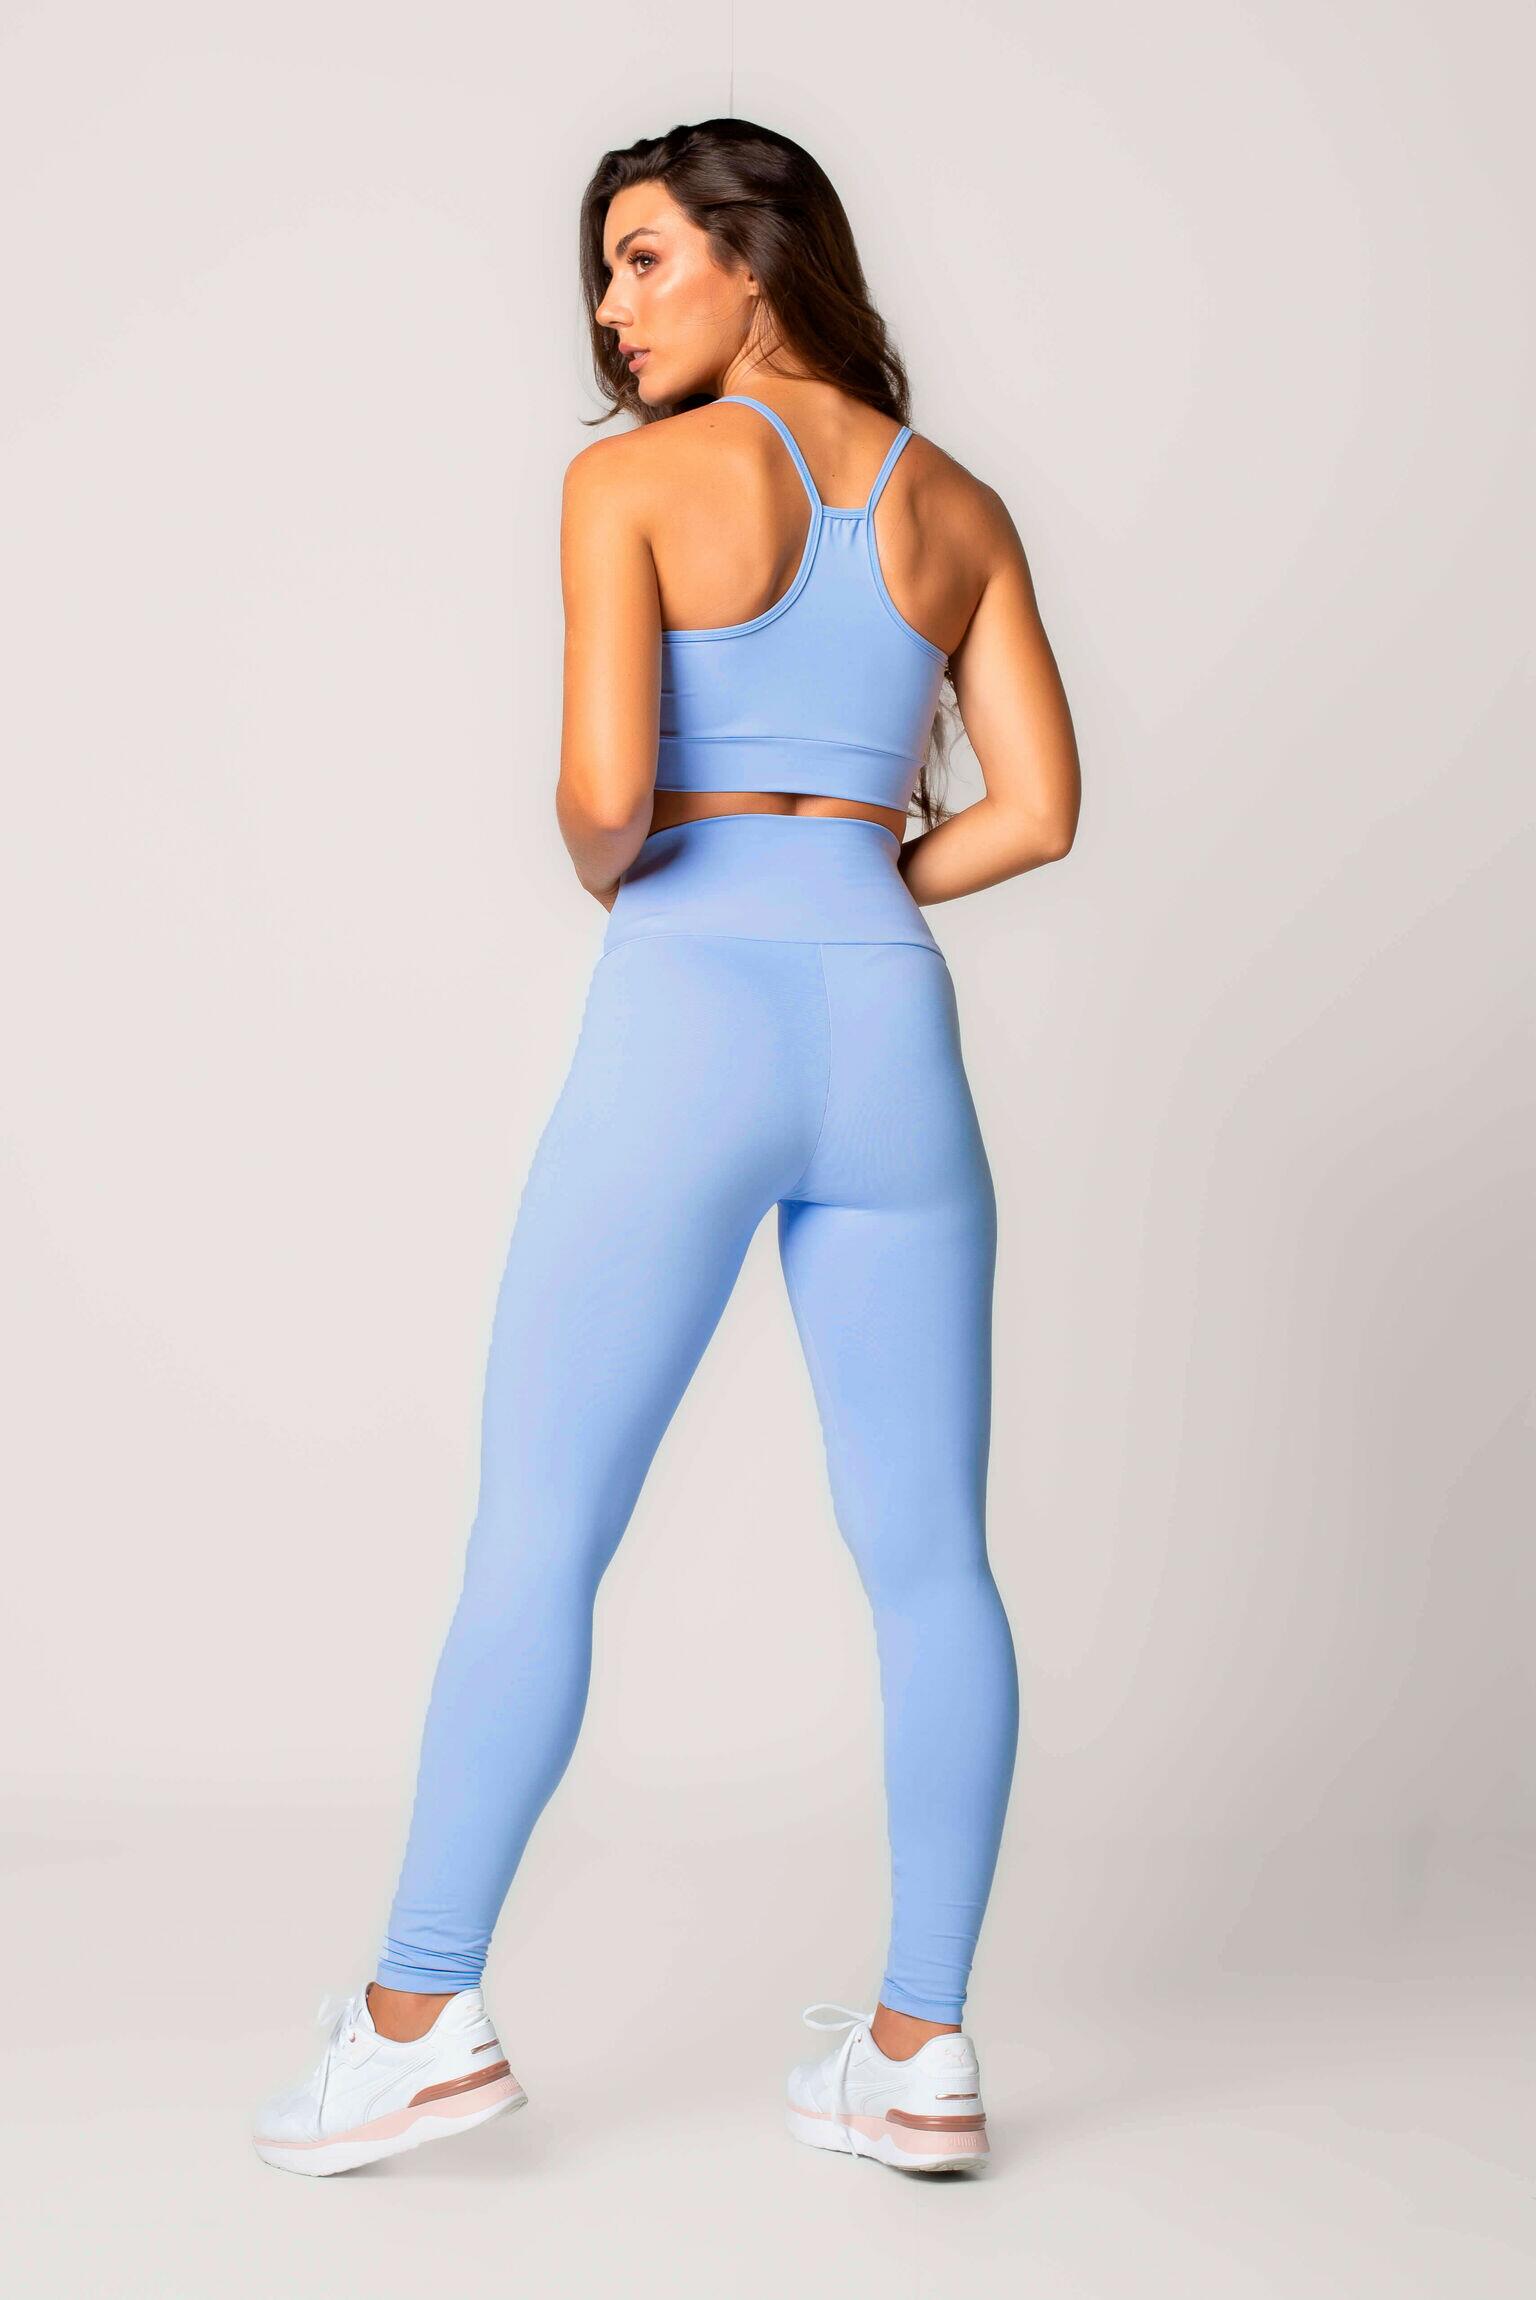 Blusa Fitness Venari Vai Treinar Hoje Azul - Azul